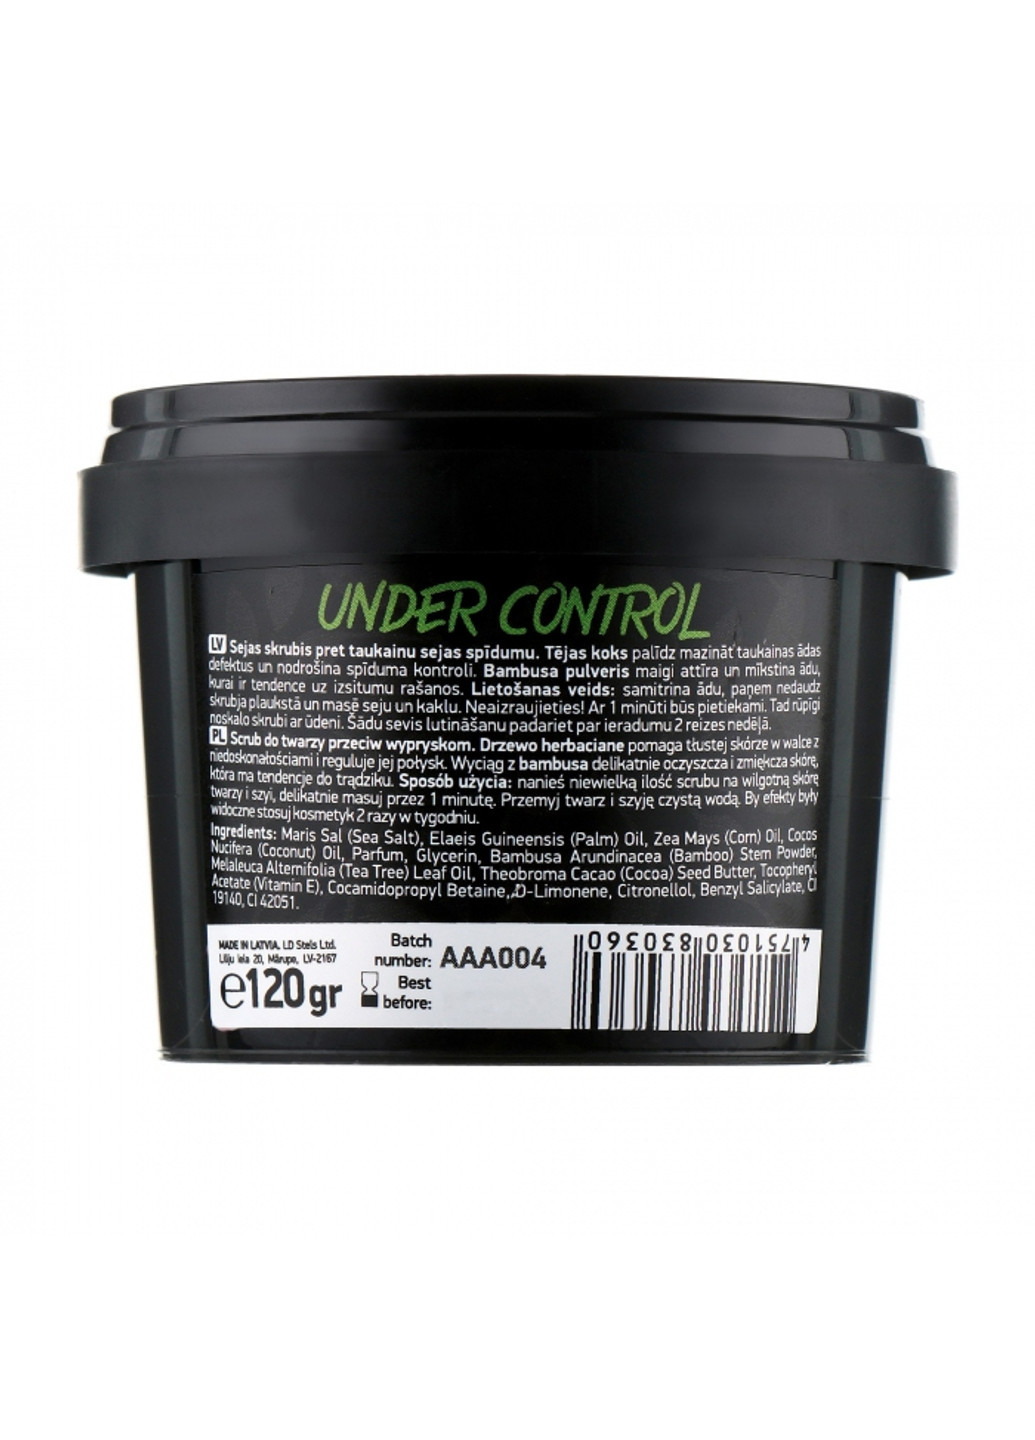 Скраб для лица Under Control 120 мл Beauty Jar (251853533)